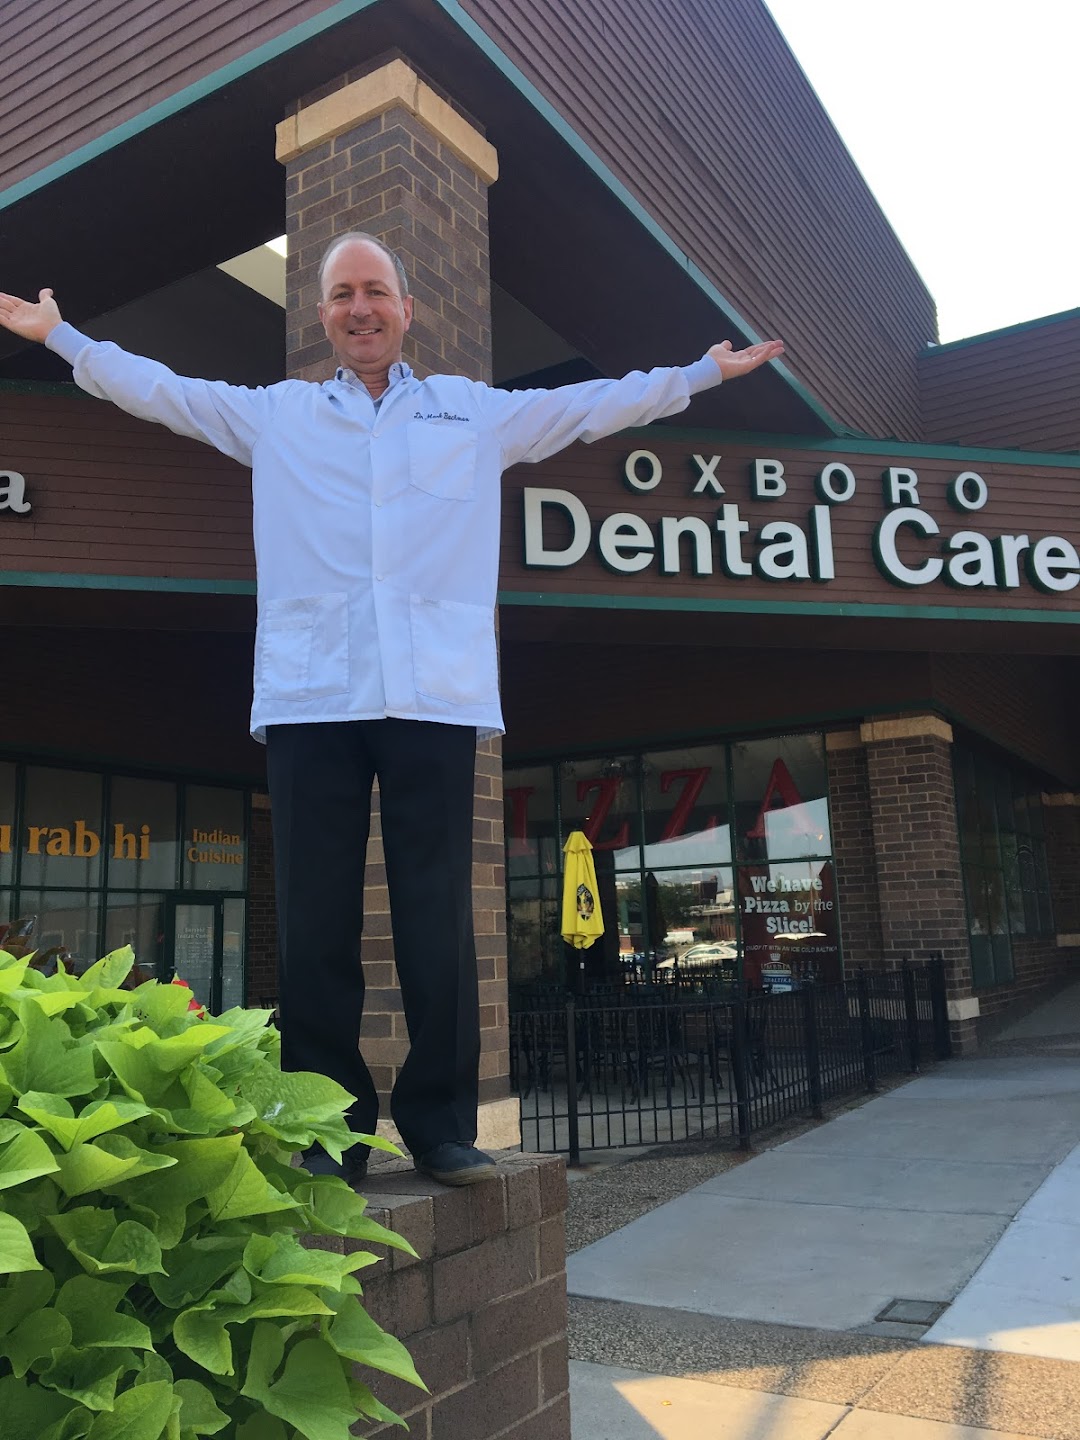 Oxboro Dental Care